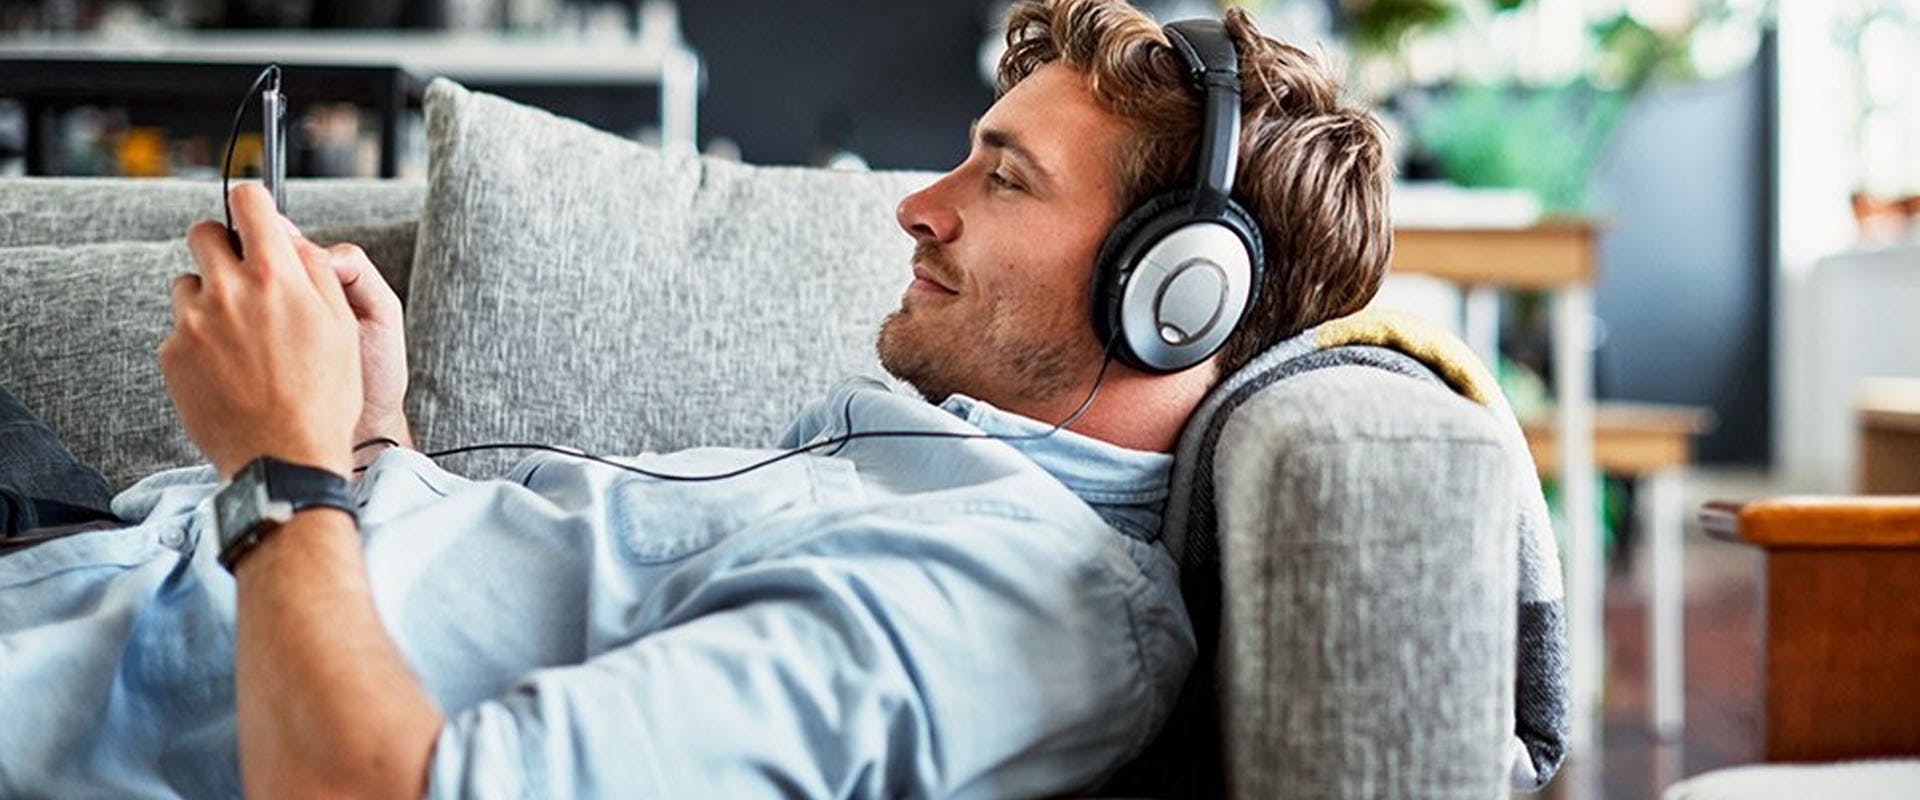 cushion person human headphones headset electronics video gaming